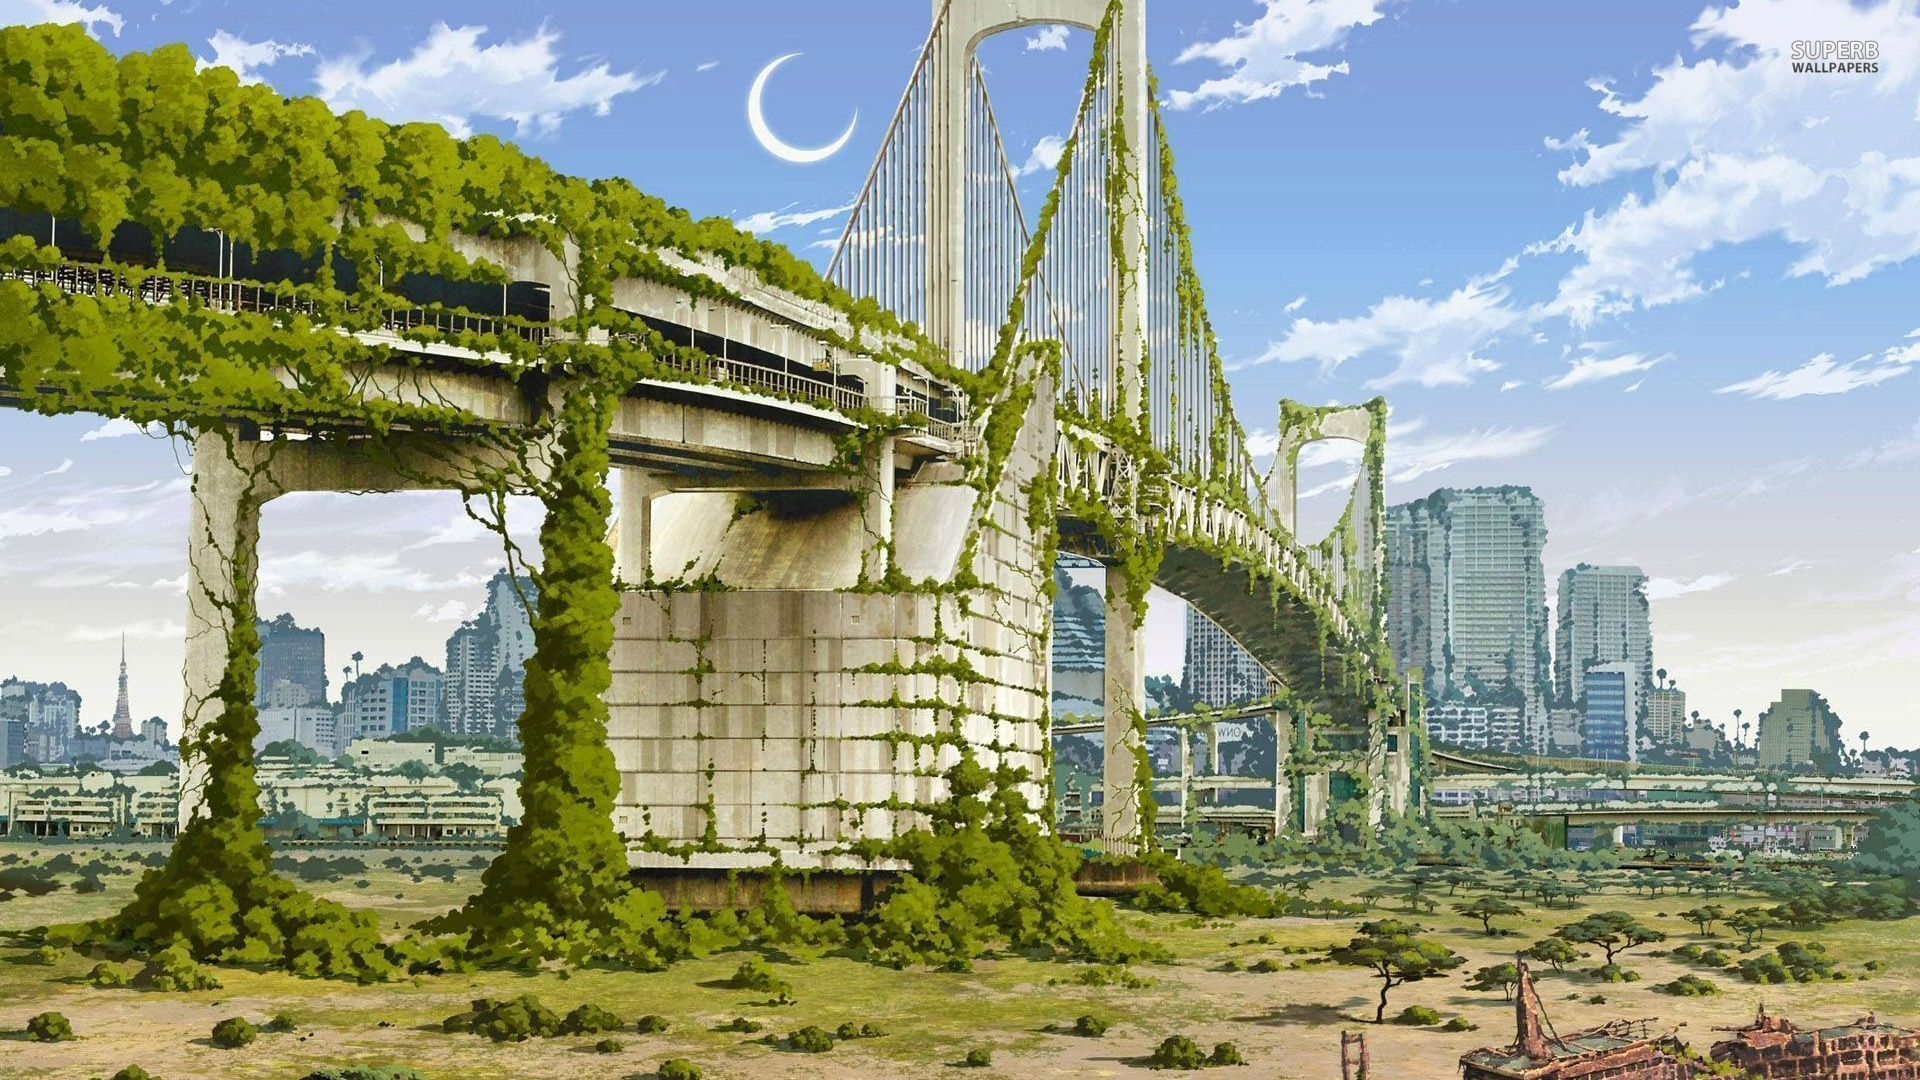 Post-apocalyptic bridge in Tokyo wallpaper - Fantasy wallpapers ...